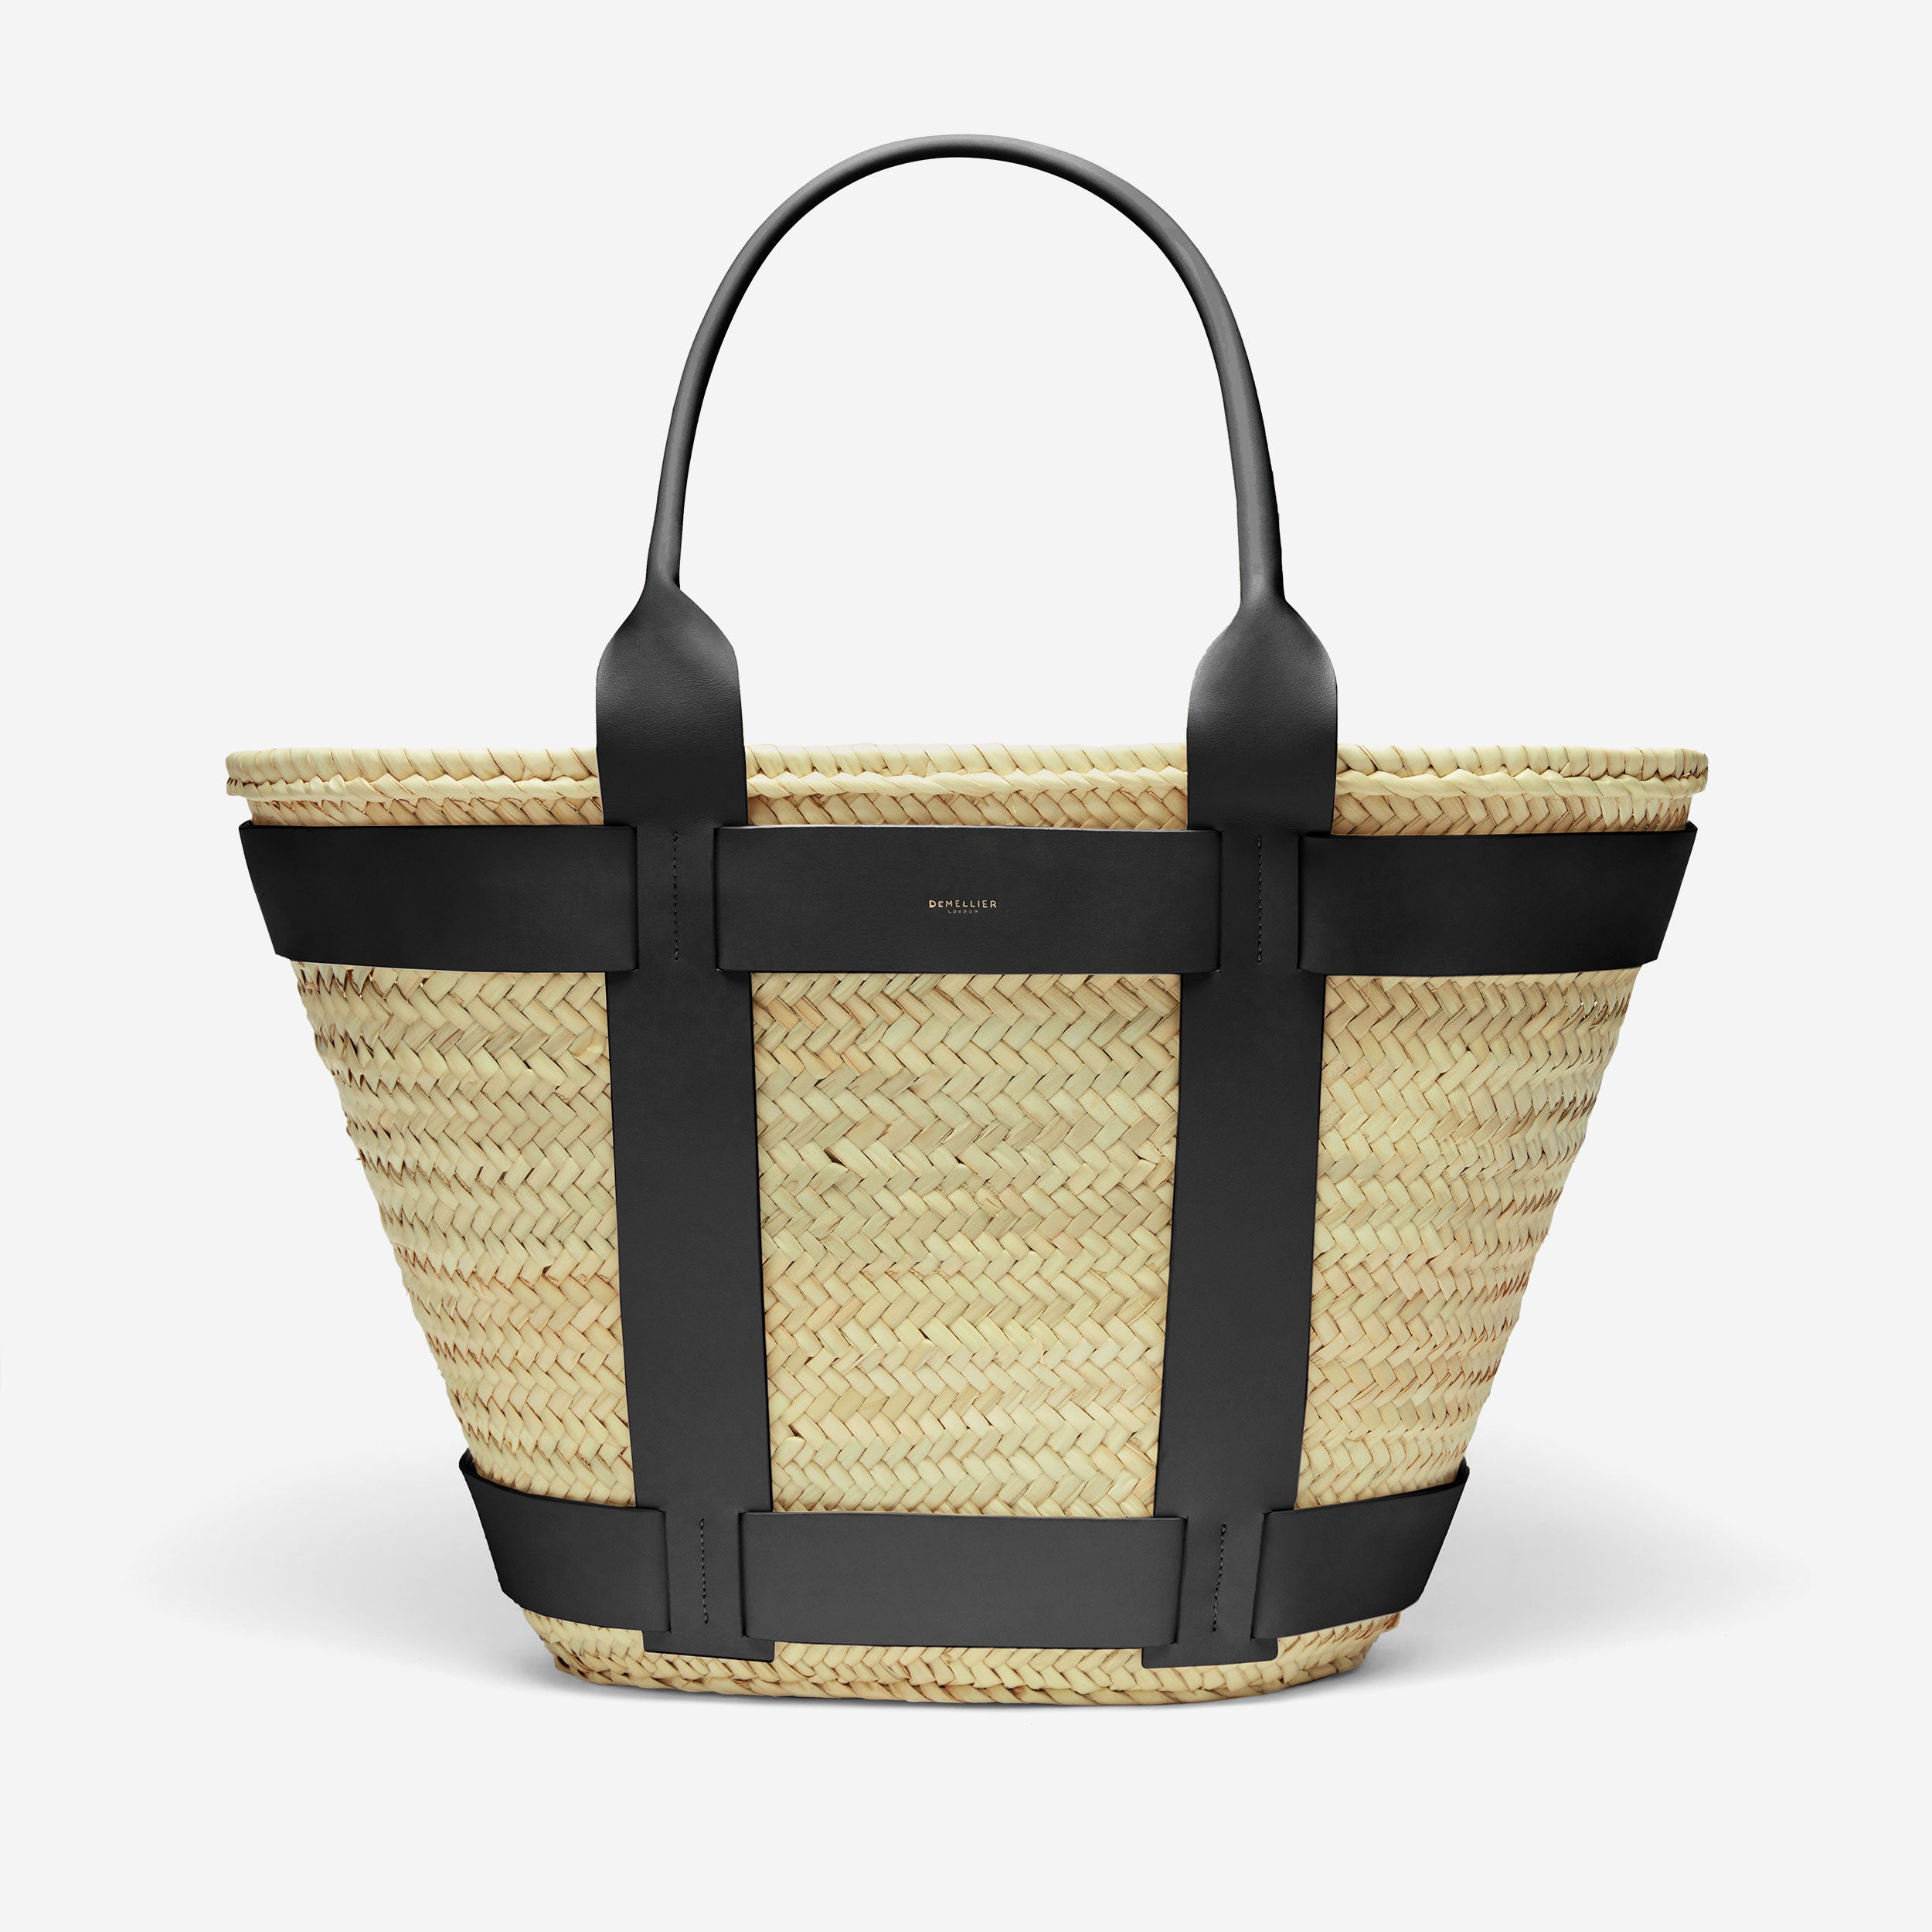 The Maxi Santorini | Natural Basket Natural Smooth | DeMellier